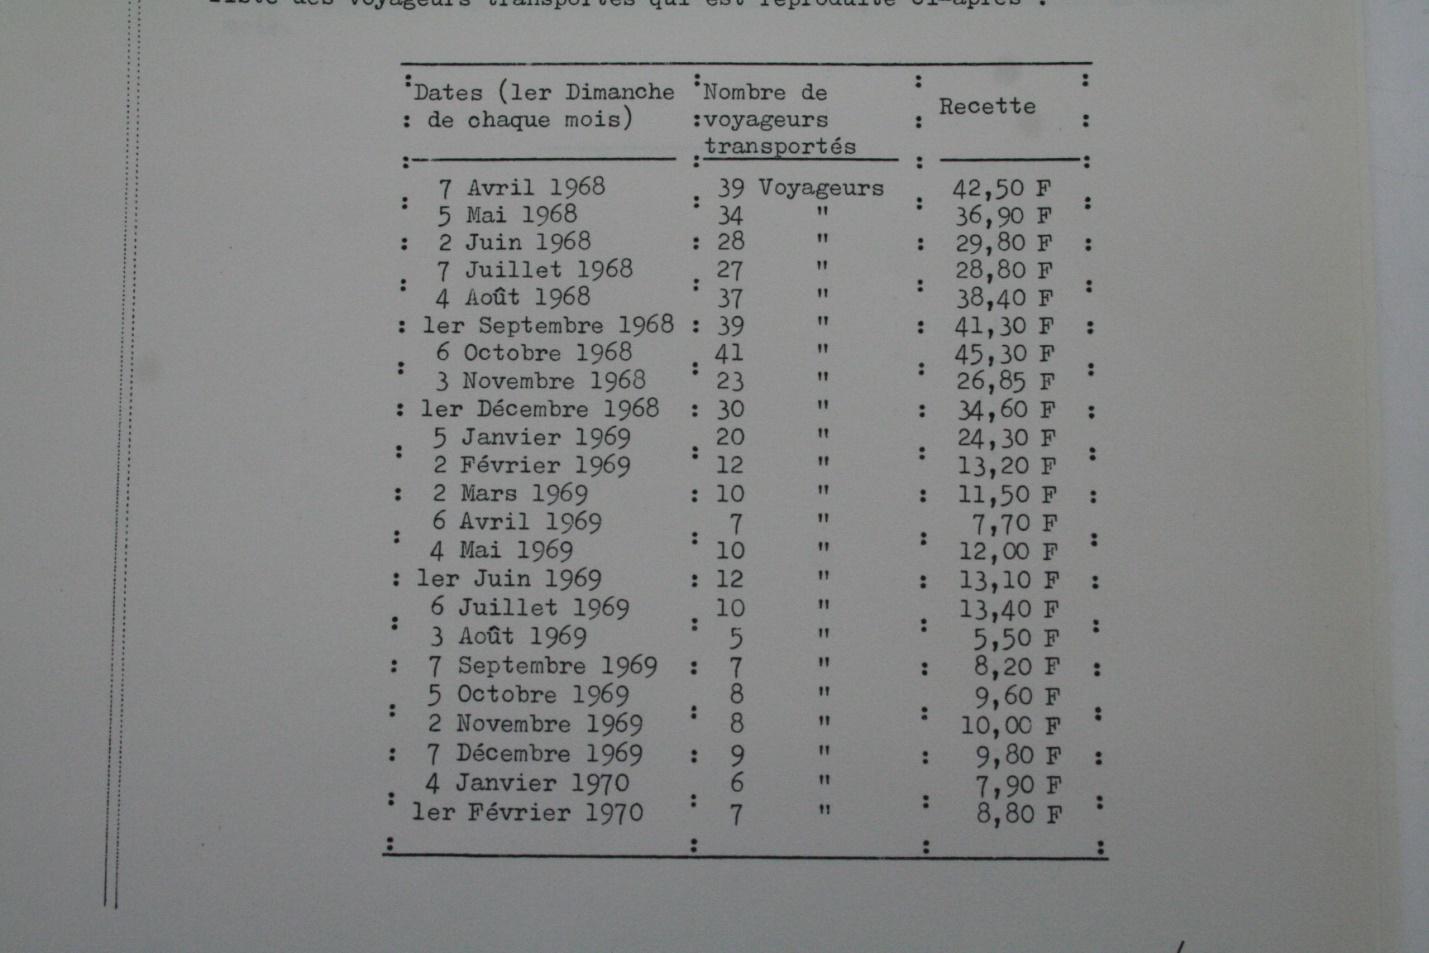 Sunday loadings and fare revenue -  1968 to 1970